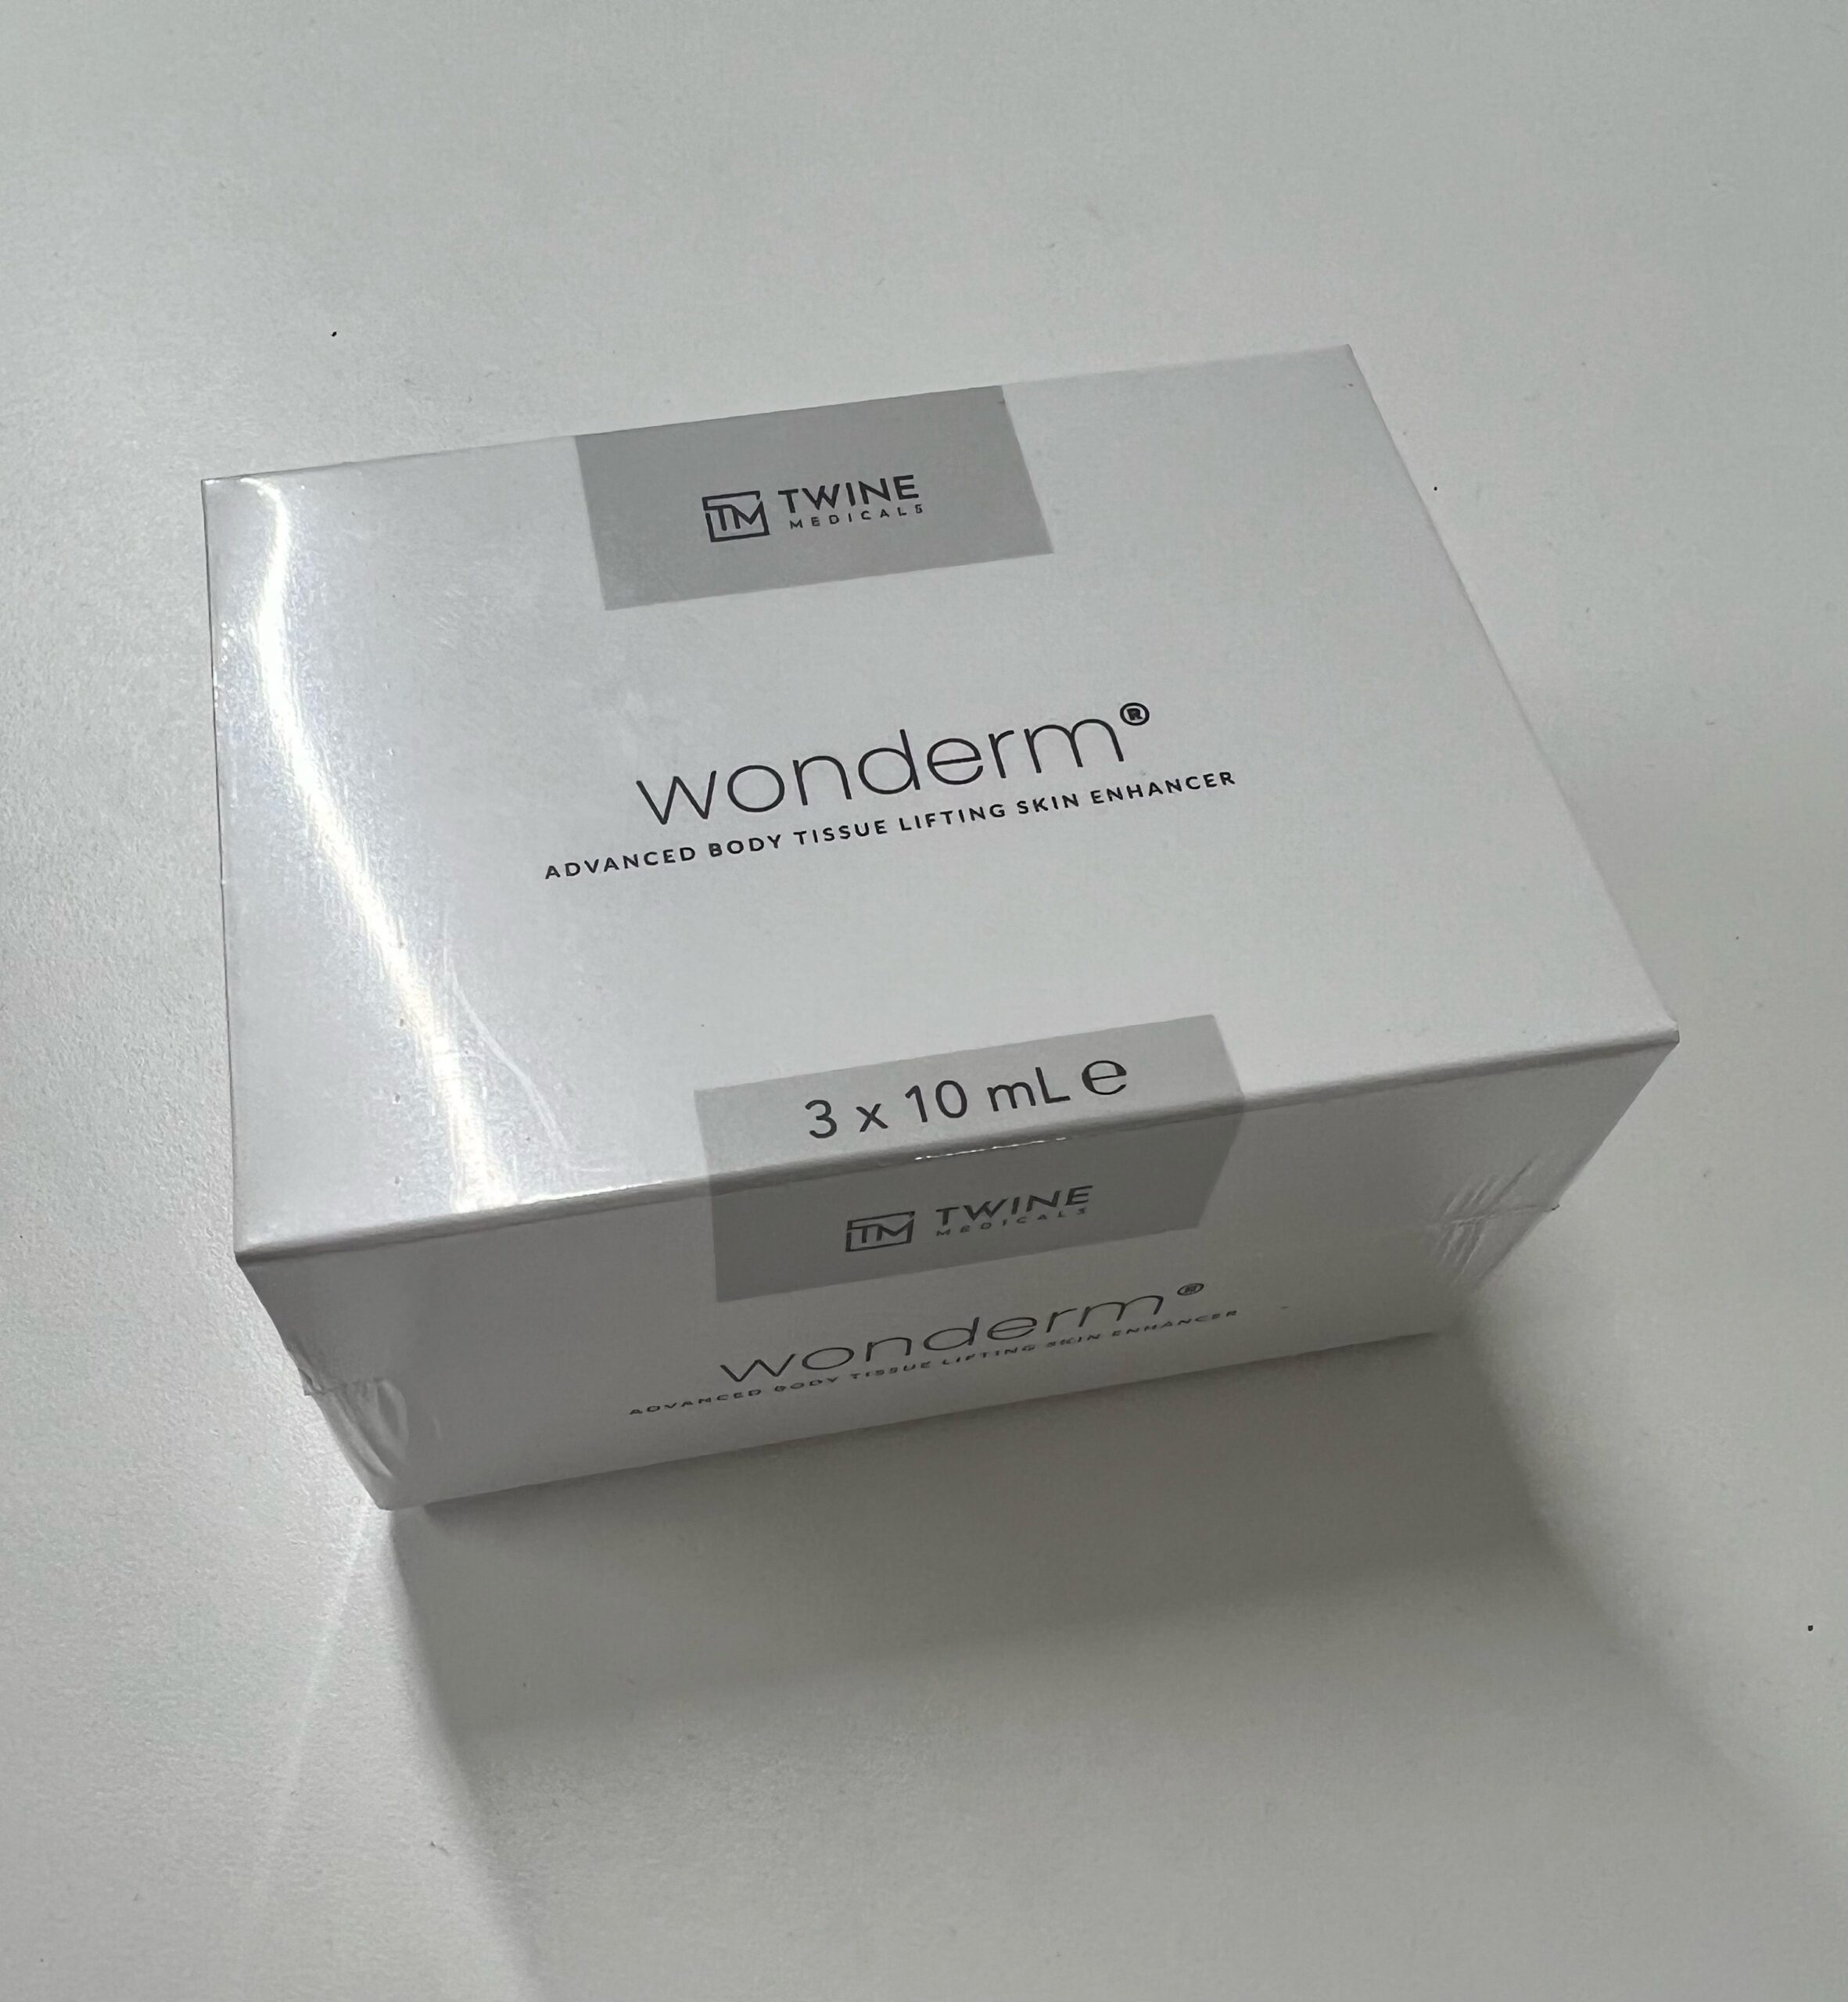 Wonderm- Advanced Body Tissue lifting skin enhancer (3x10ml)